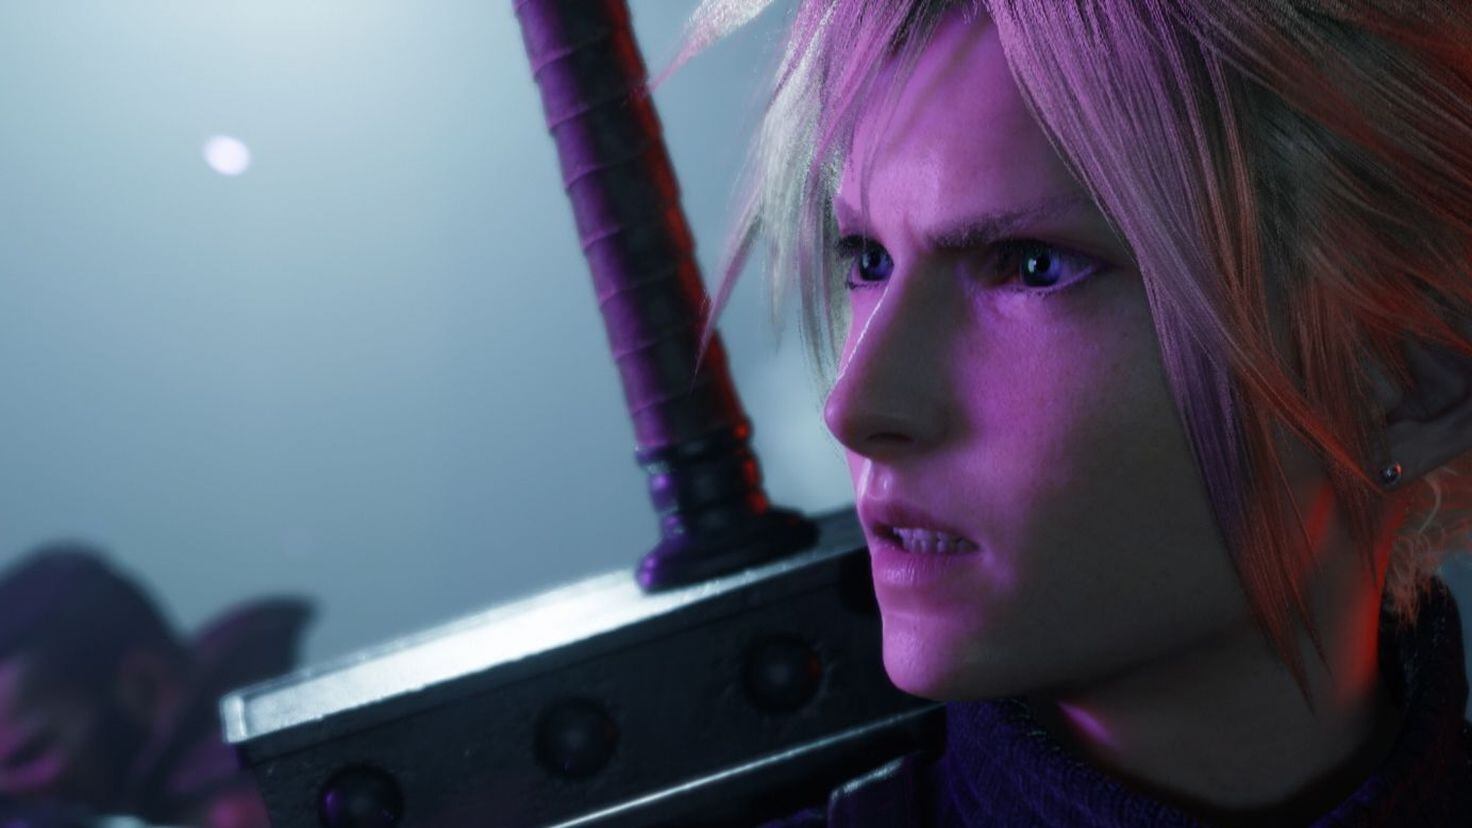 Final Fantasy 7 Rebirth PC release date estimate, story, and more